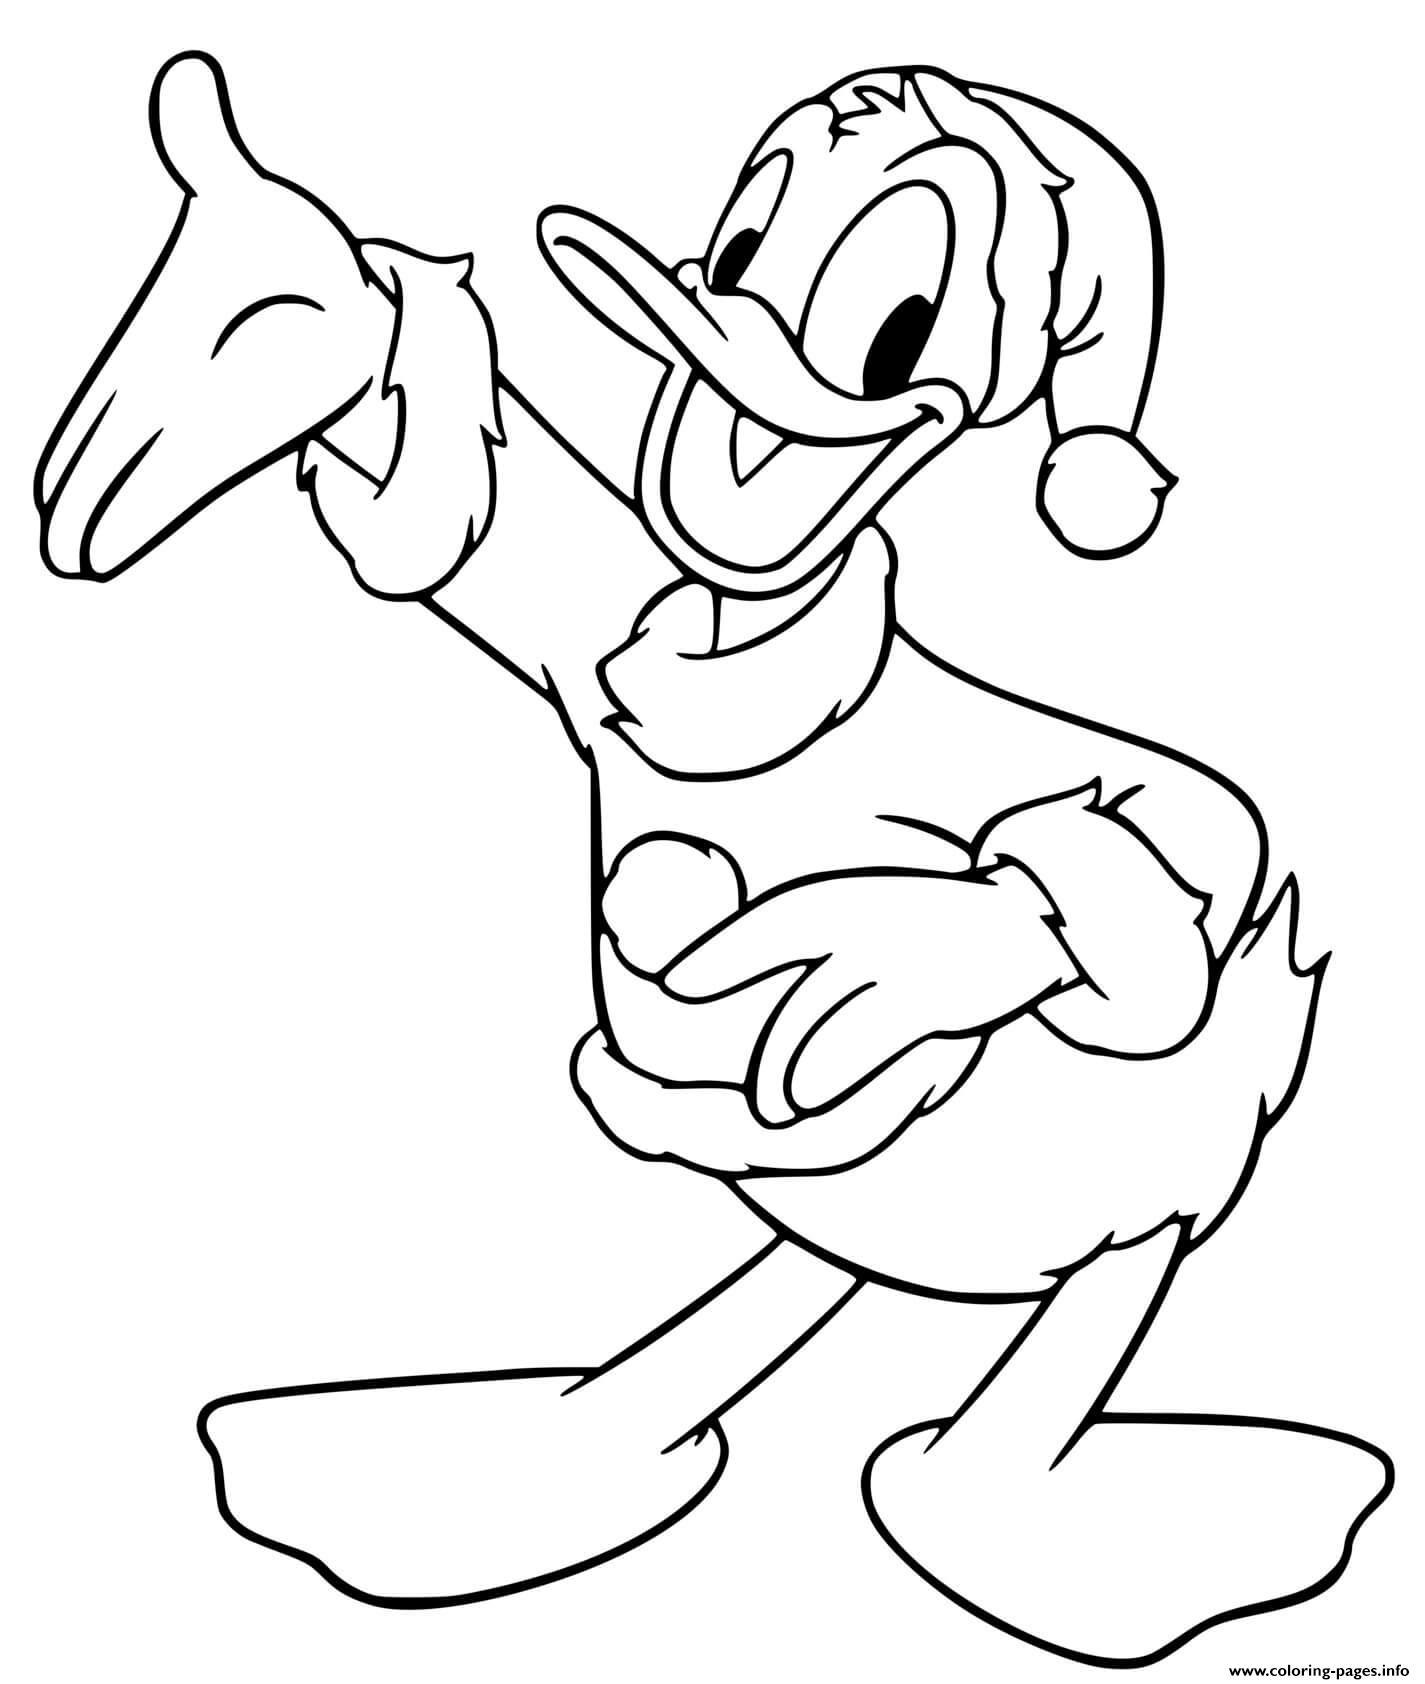 Donald Duck As Santa Claus coloring